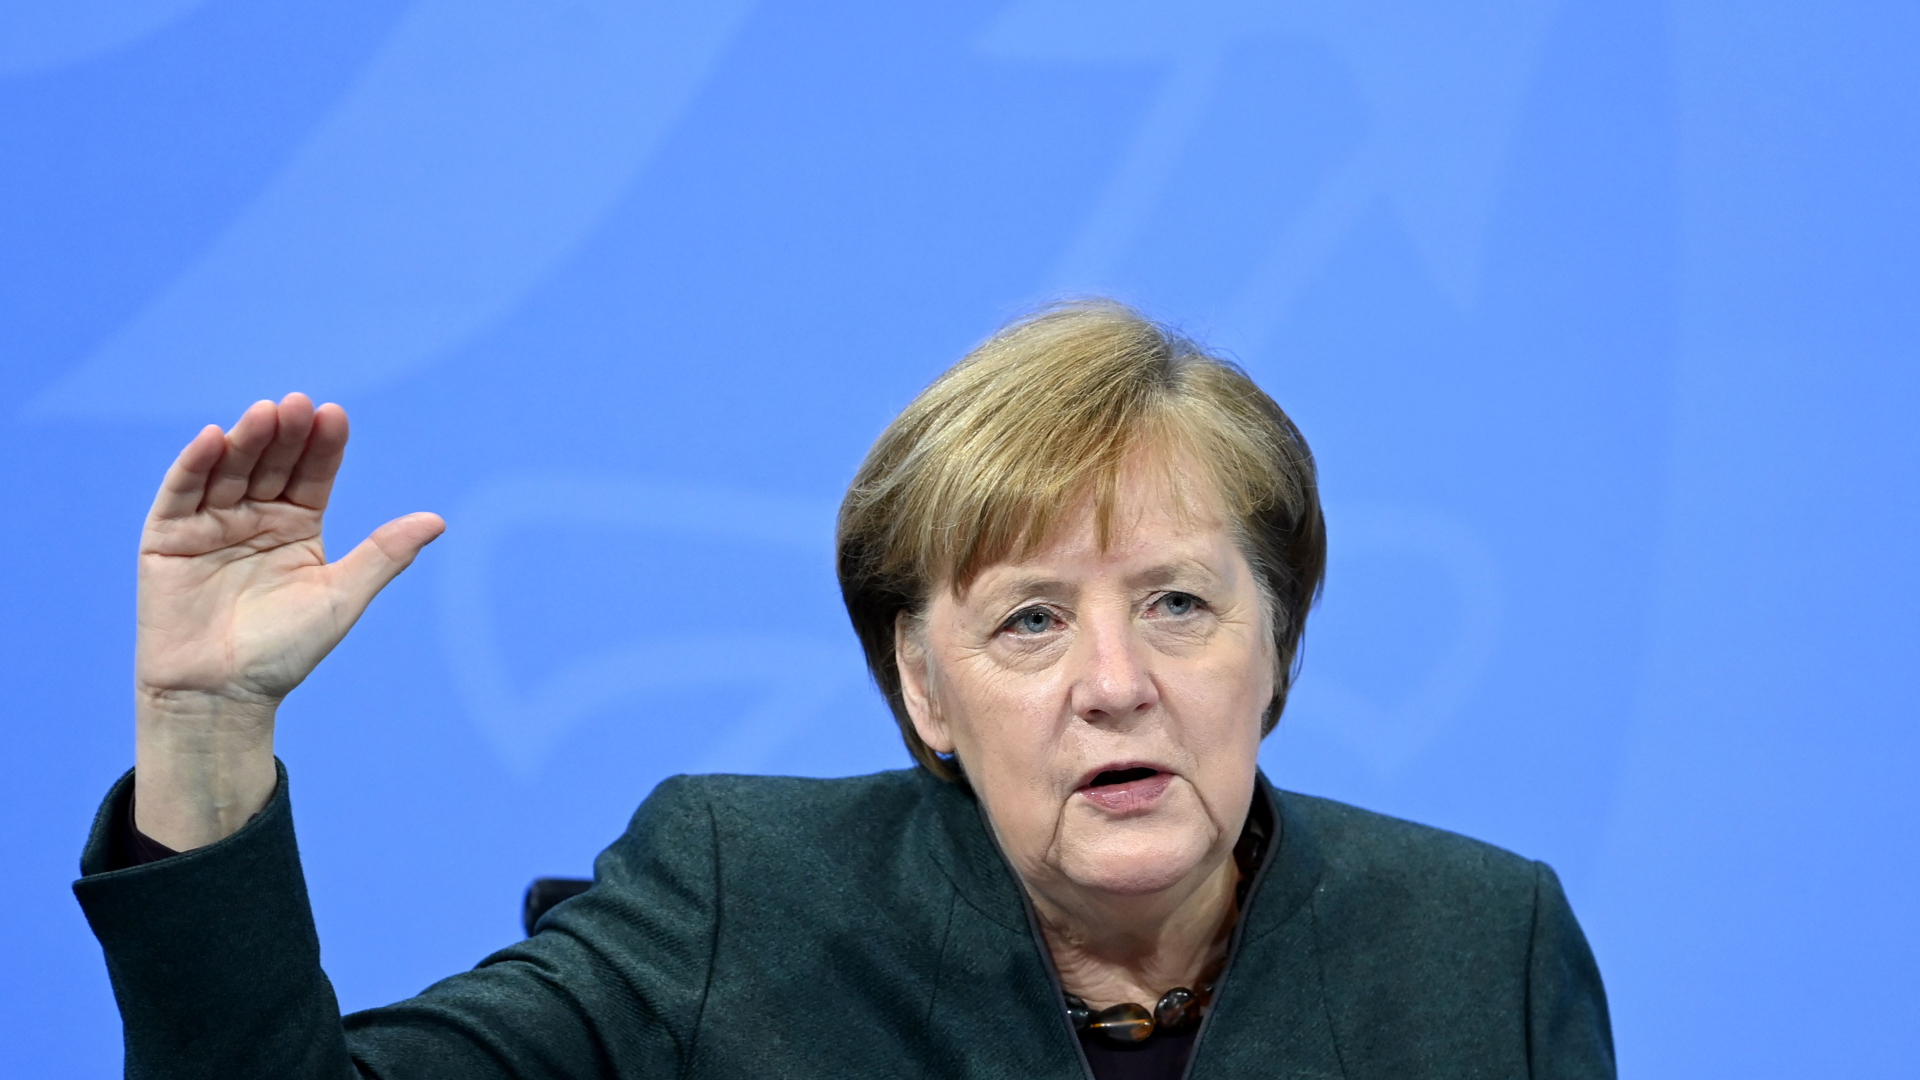 Bundeskanzlerin Angela Merkel.| Bildquelle: FILIP SINGER/POOL/EPA-EFE/Shutte